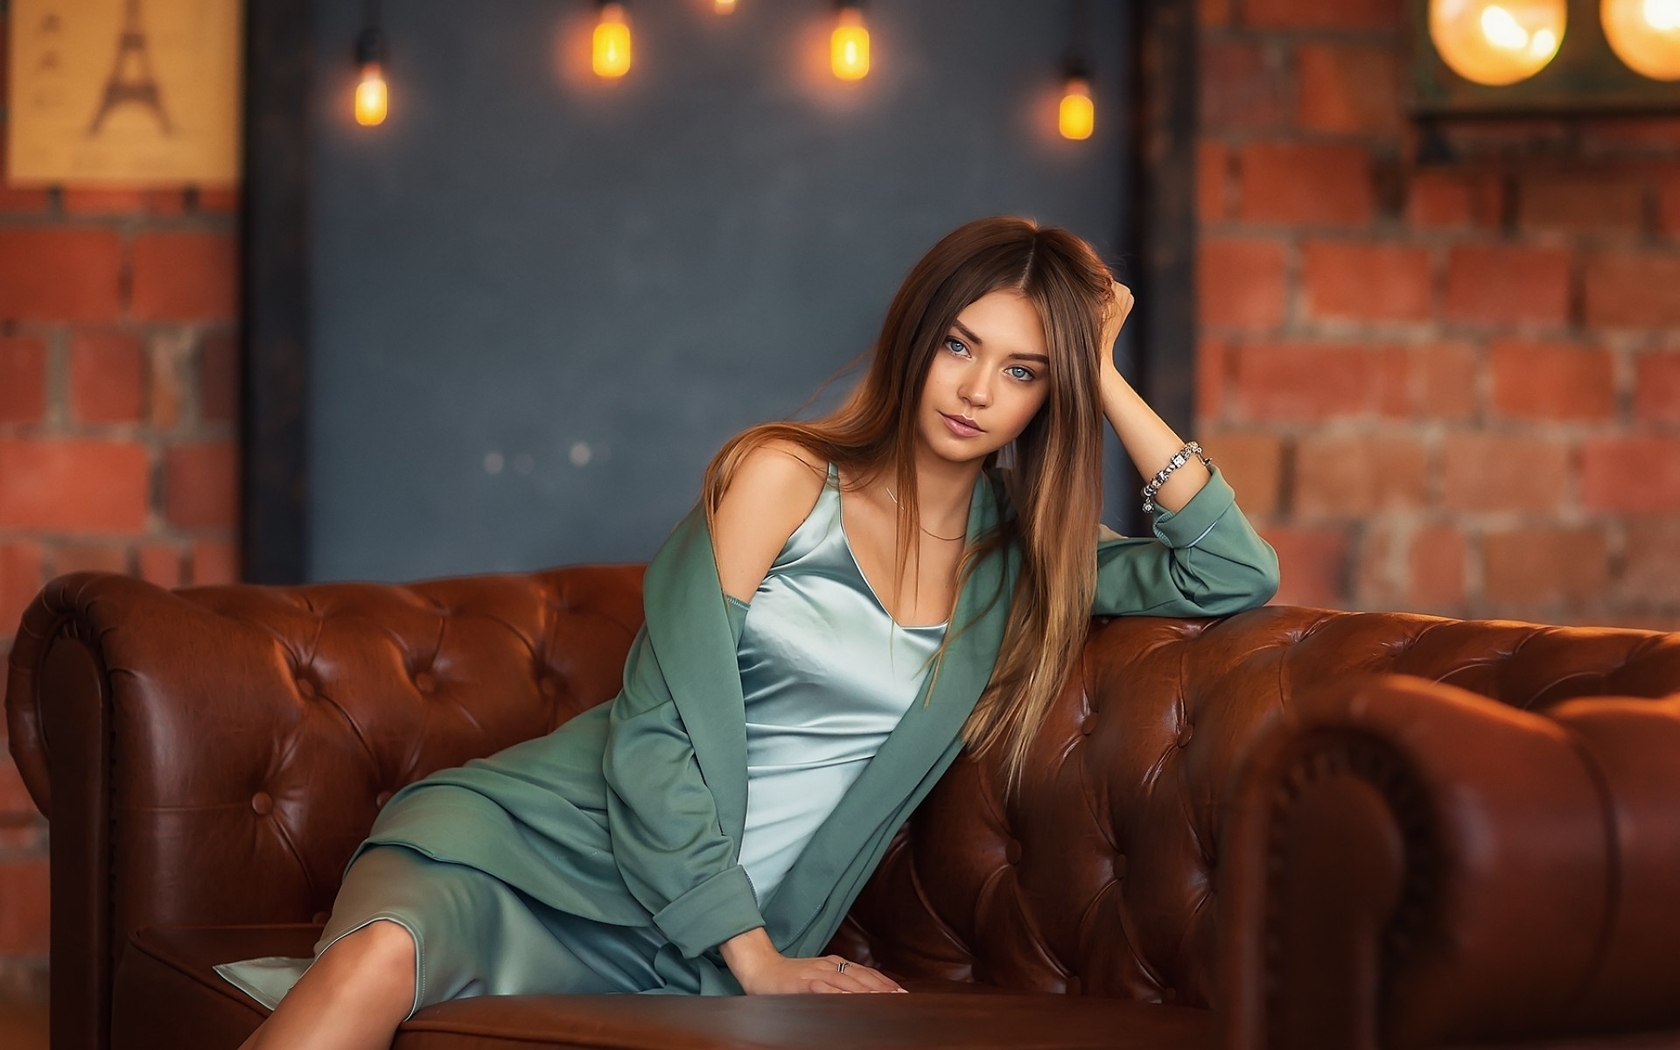 Image: Girl, long hair, pose, sofa, leather, lighting, lamp, wall, brick, Polina Kostyuk, model